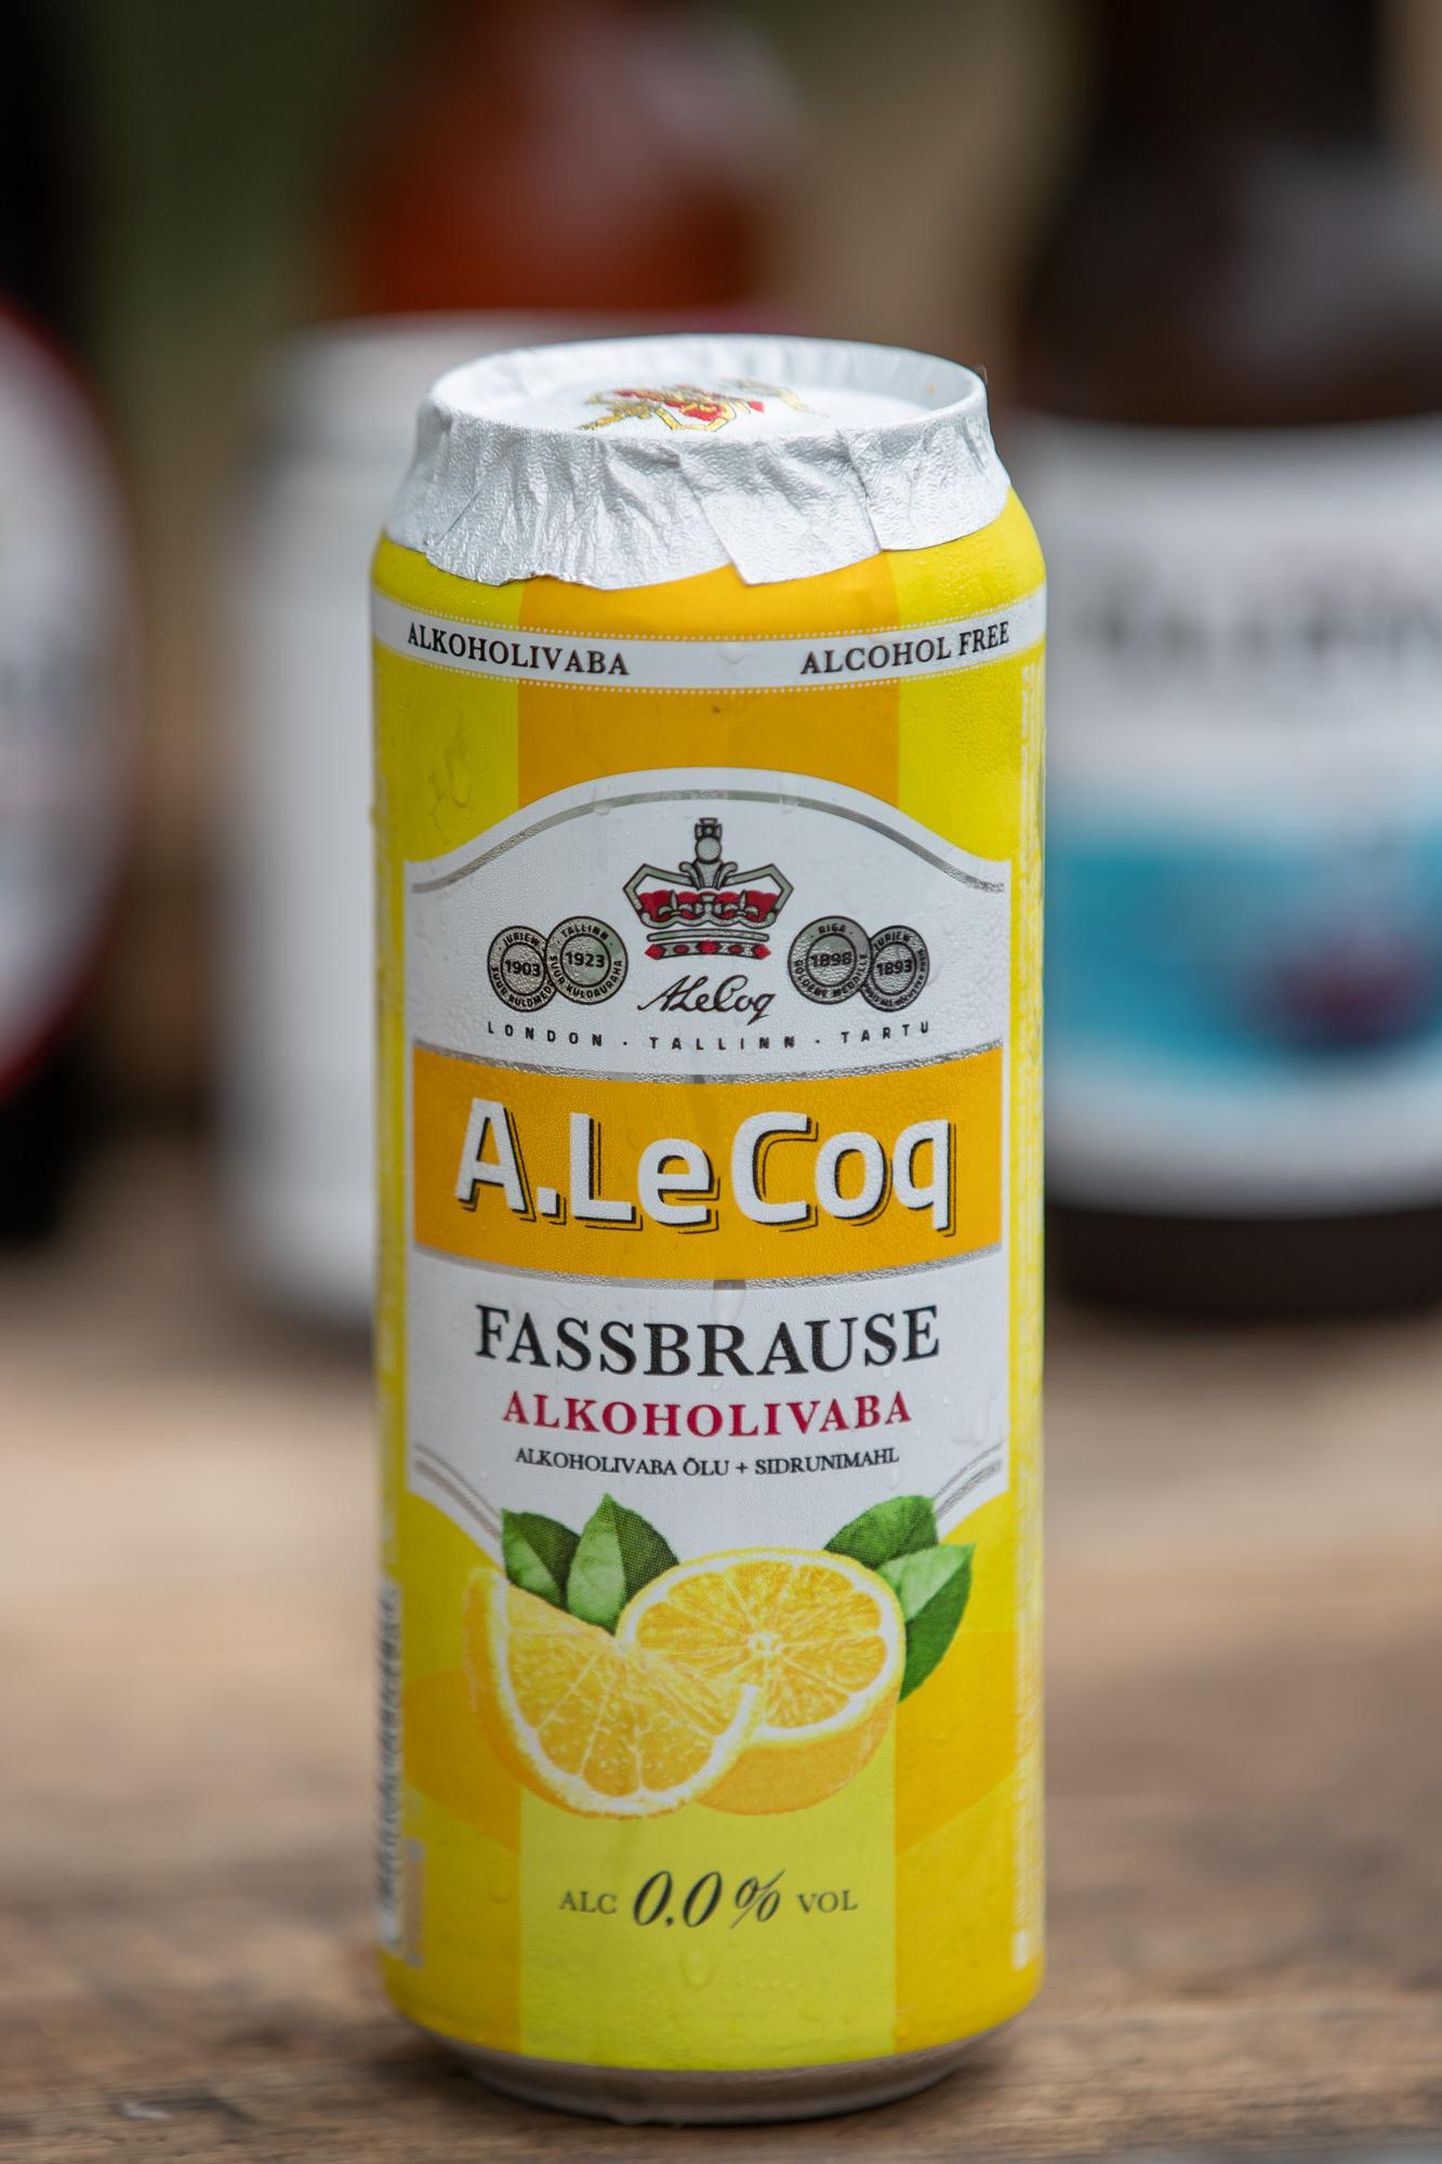 A. Le Coqi Fassbrause Lemon alkoholivaba õlu sidrunimahlaga. 0% vol. FOTO: Eero Vabamägi